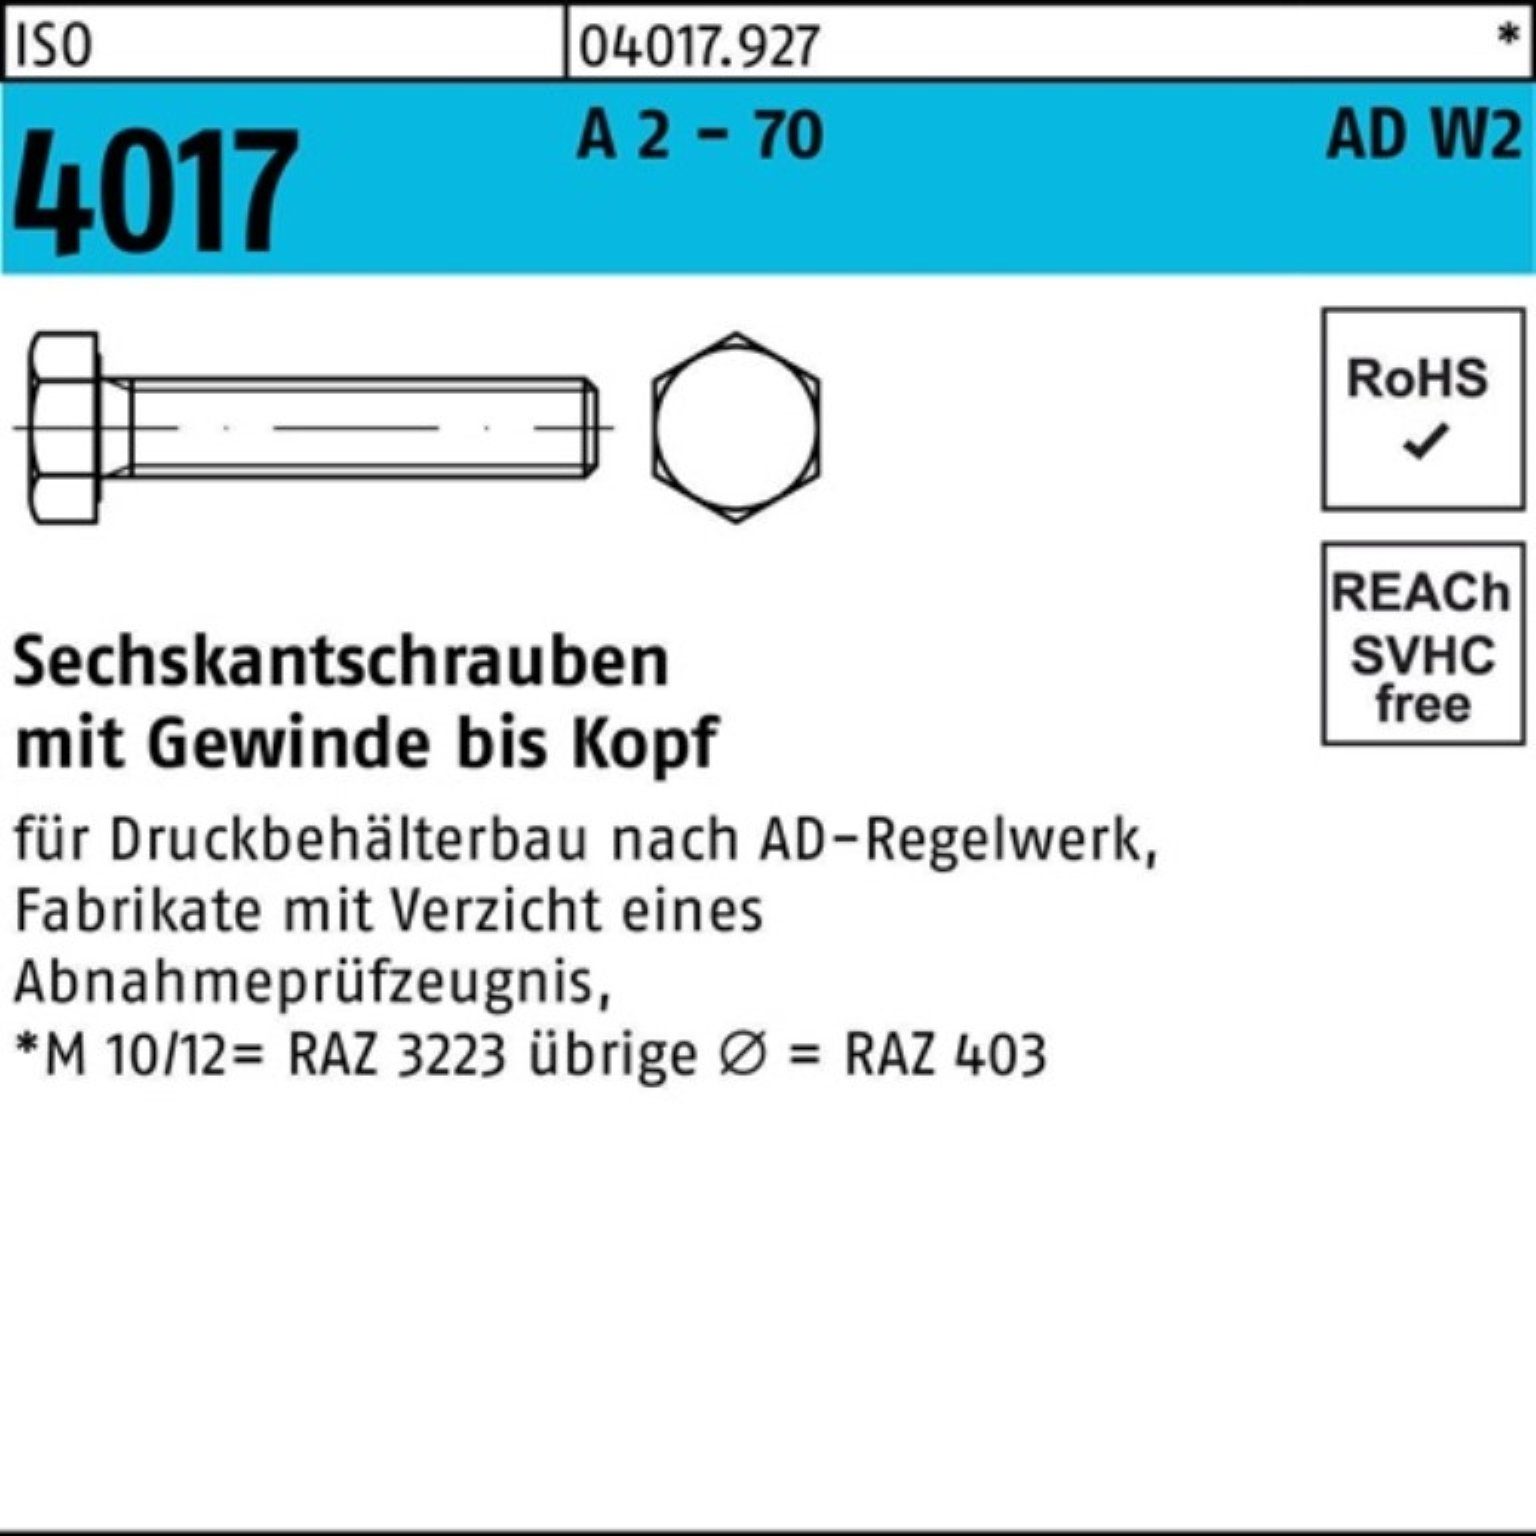 Bufab Sechskantschraube 100er Pack Sechskantschraube ISO 4017 VG M20x 35 A 2 - 70 AD-W2 25 St